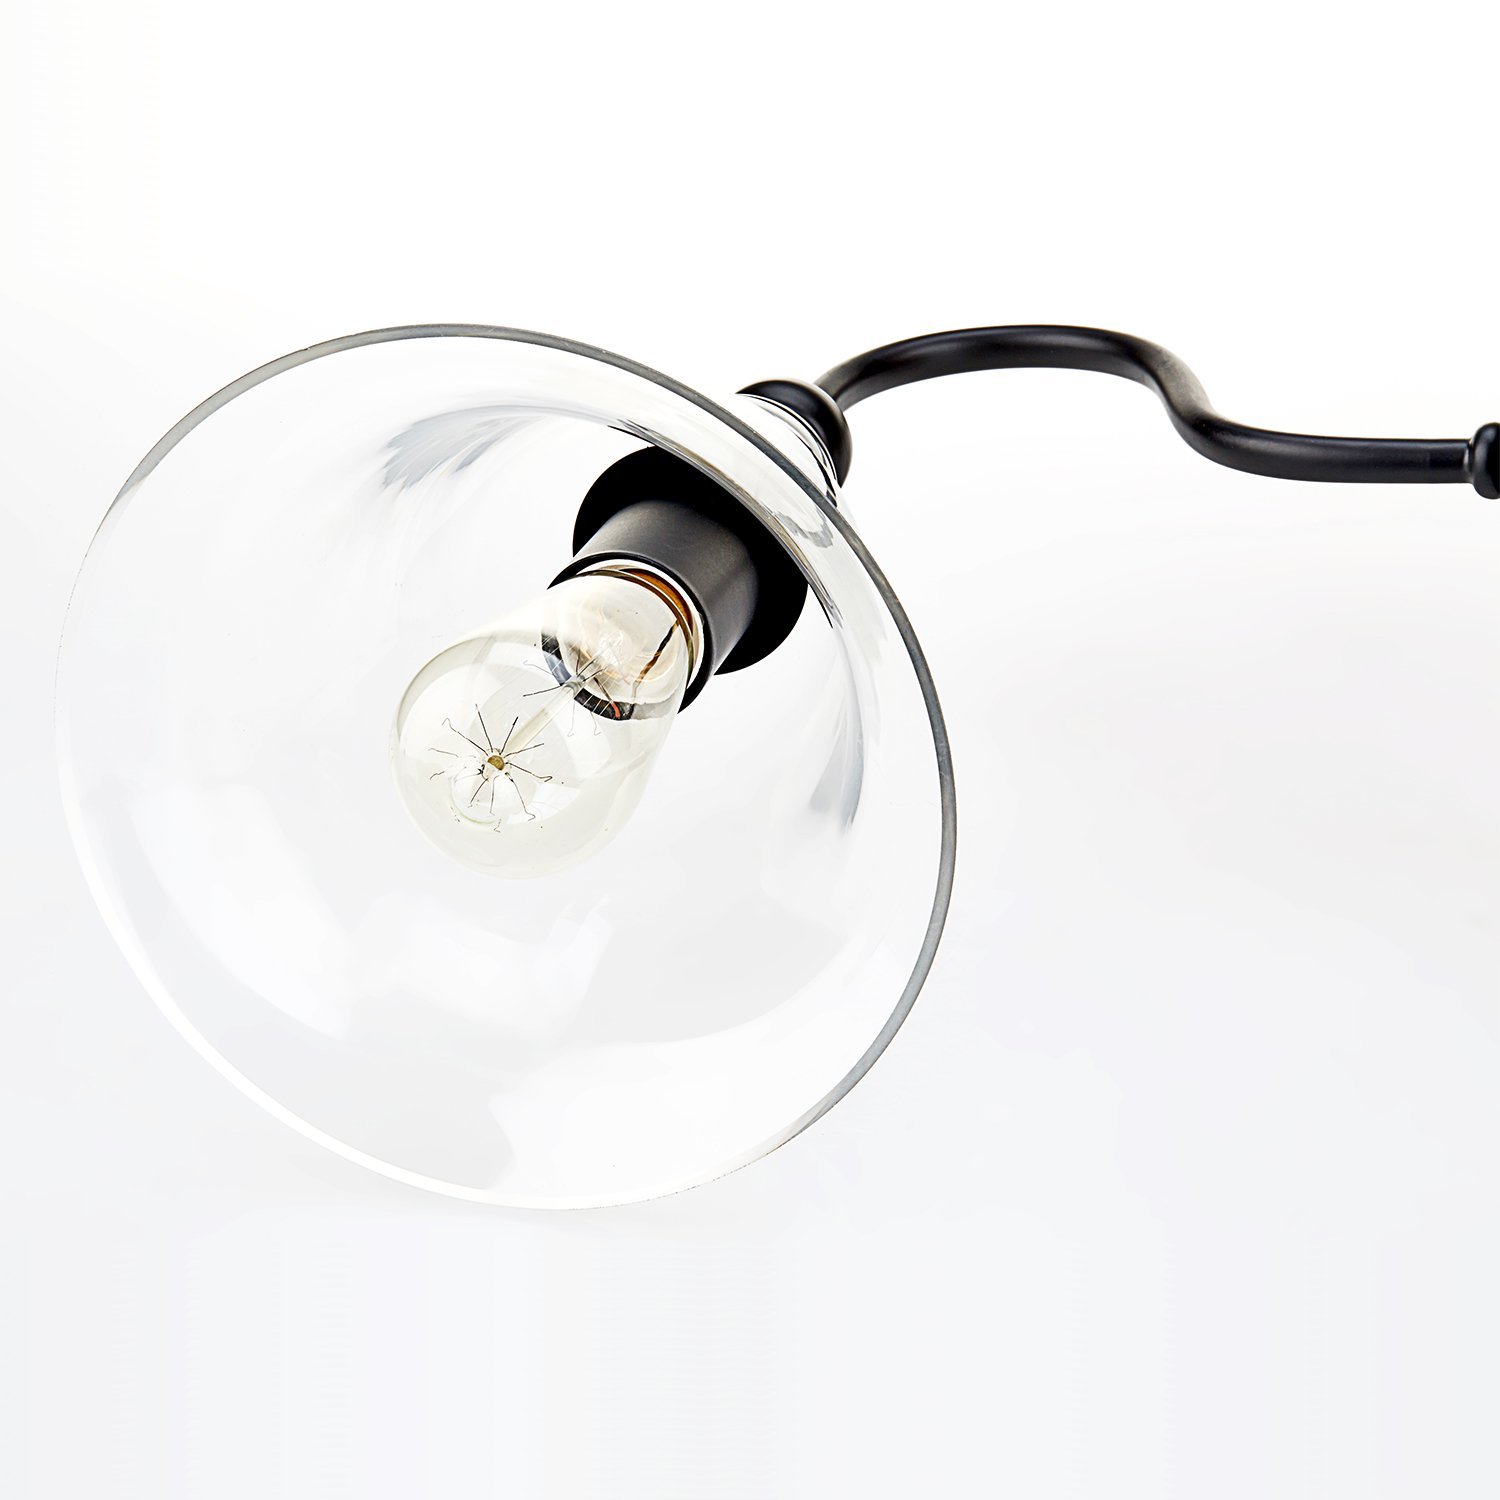 Matte Black Glass Pendant Light Fixture Hanging Ceiling Light